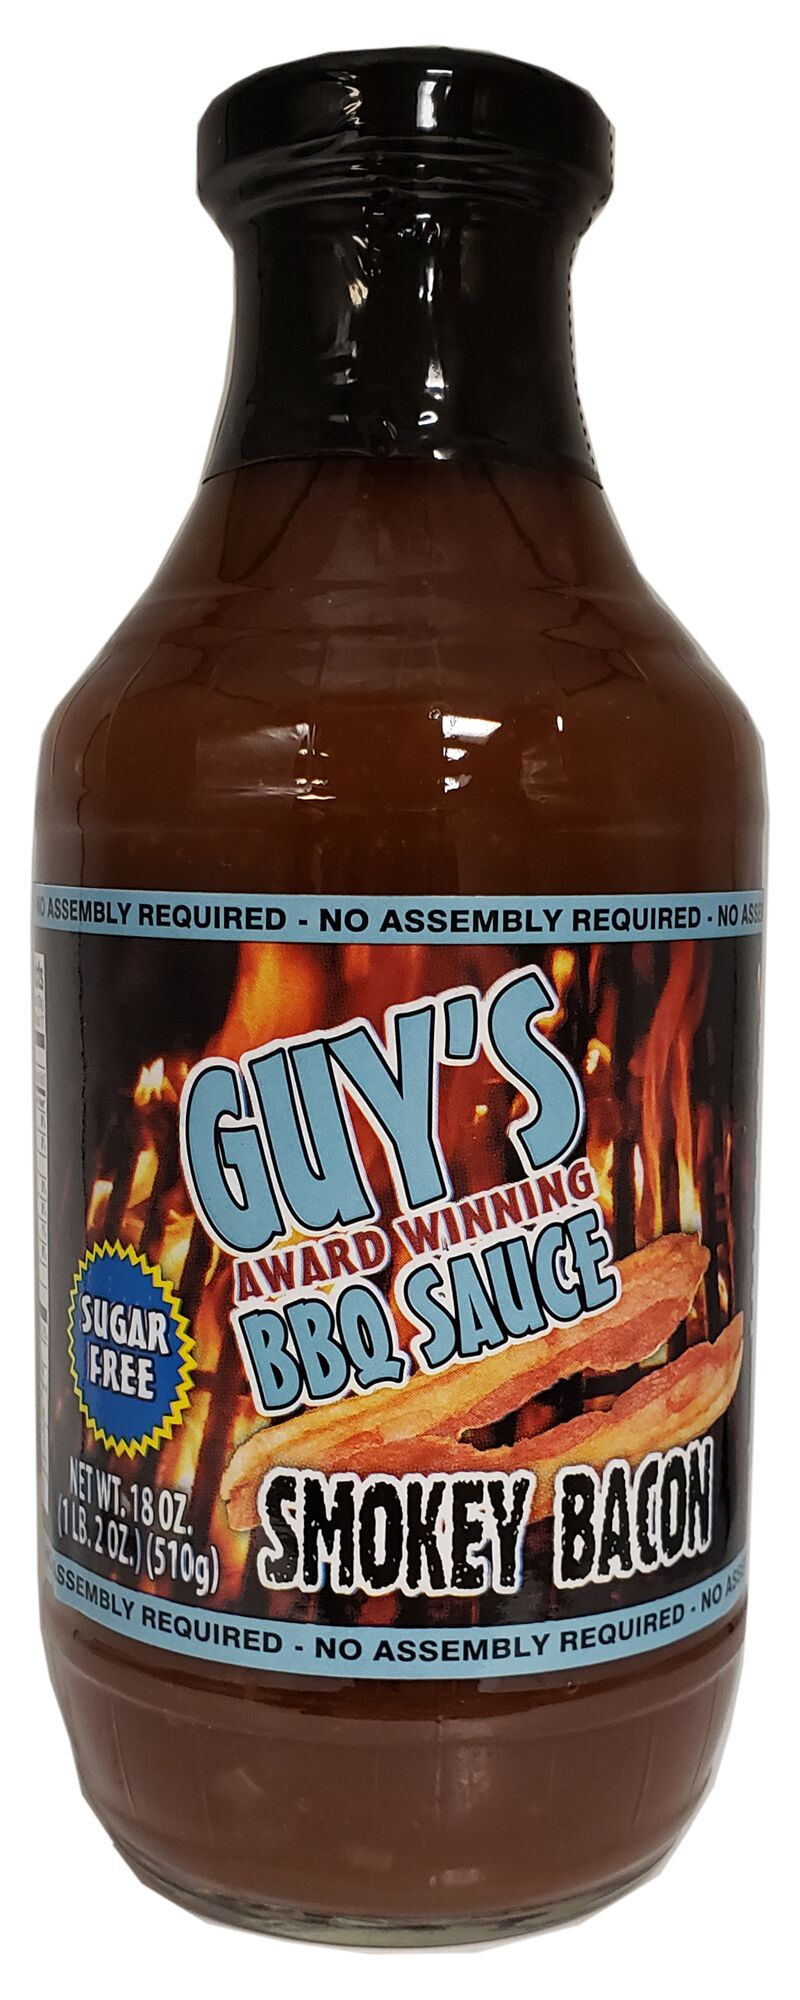 Guy's Award Winning Sugar Free BBQ Sauce